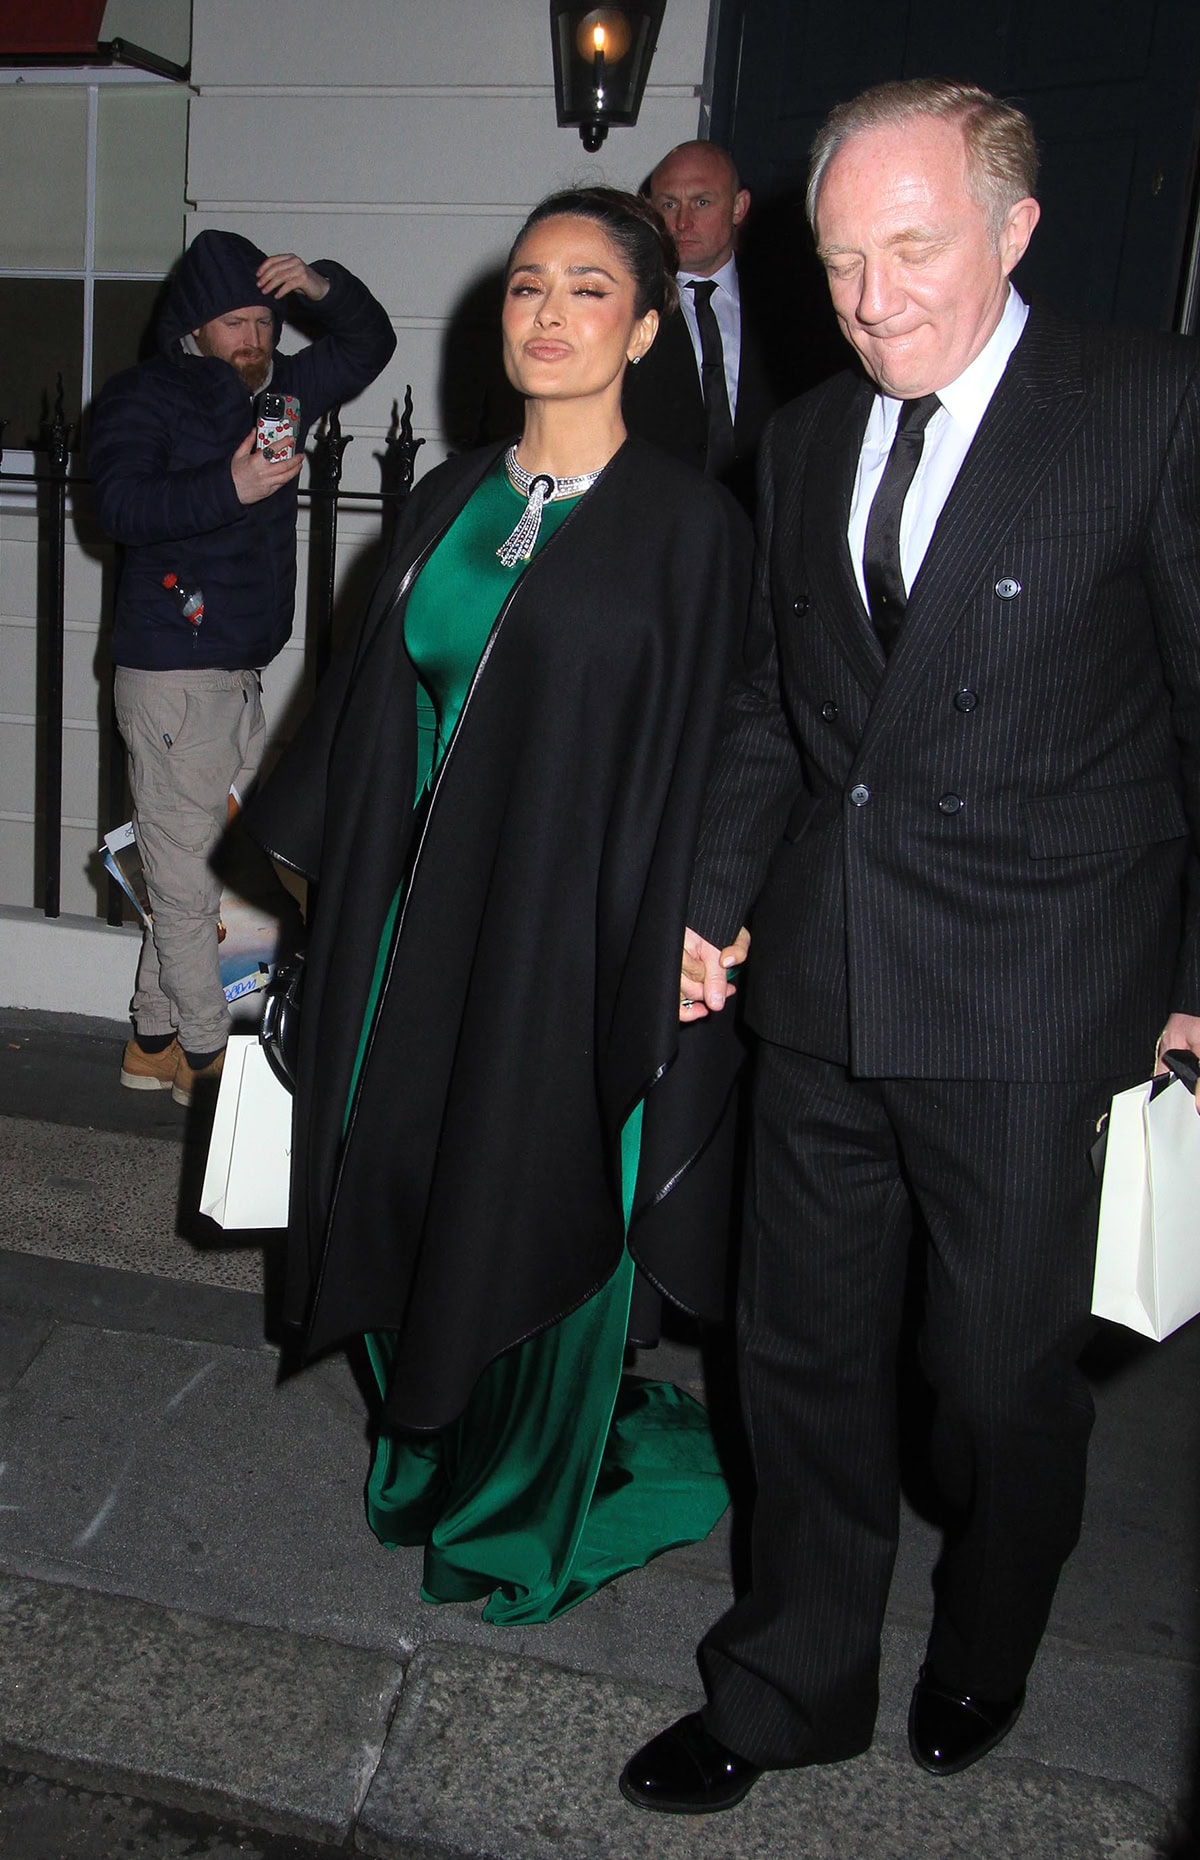 Salma Hayek looks regal in her emerald-green Victoria Beckham gown styled with a statement Boucheron diamond necklace at Victoria Beckham's birthday party